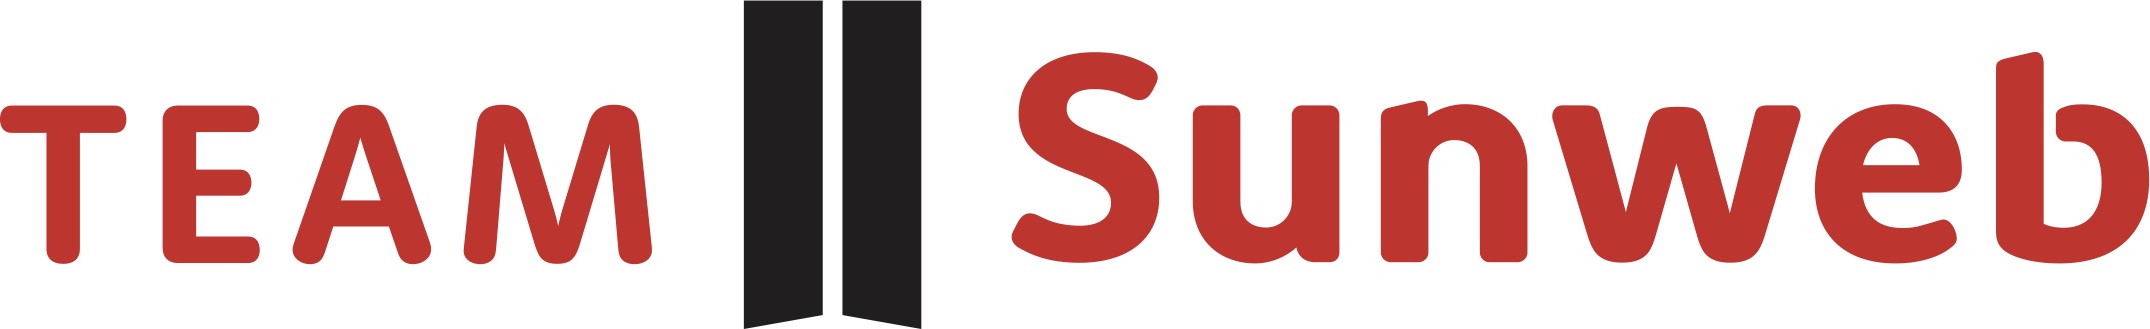 Team Sunweb logo